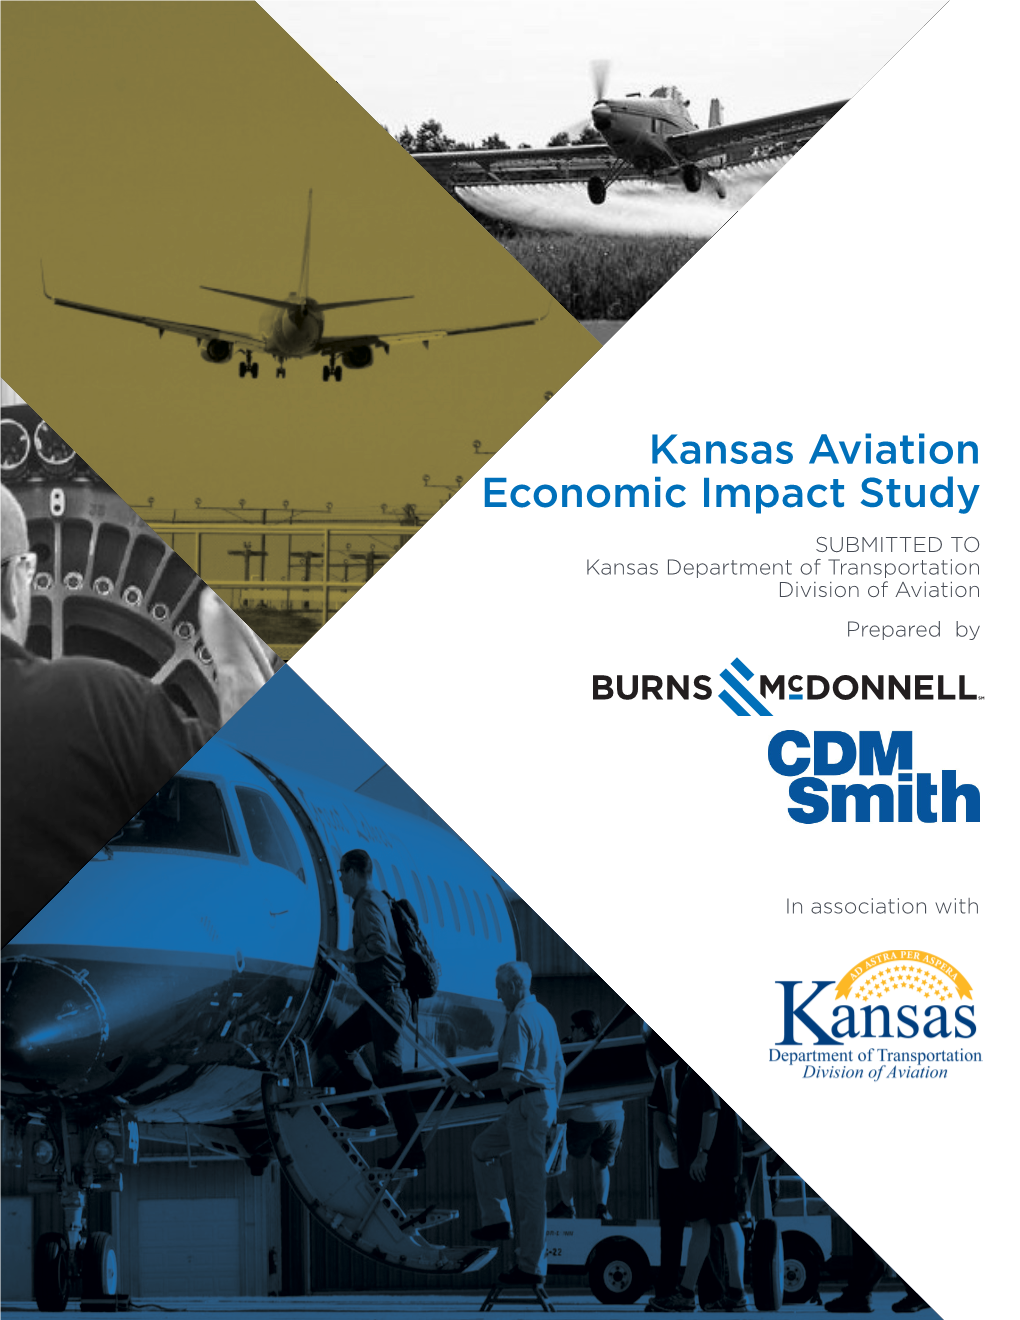 Kansas Aviation Economic Impact Study Update